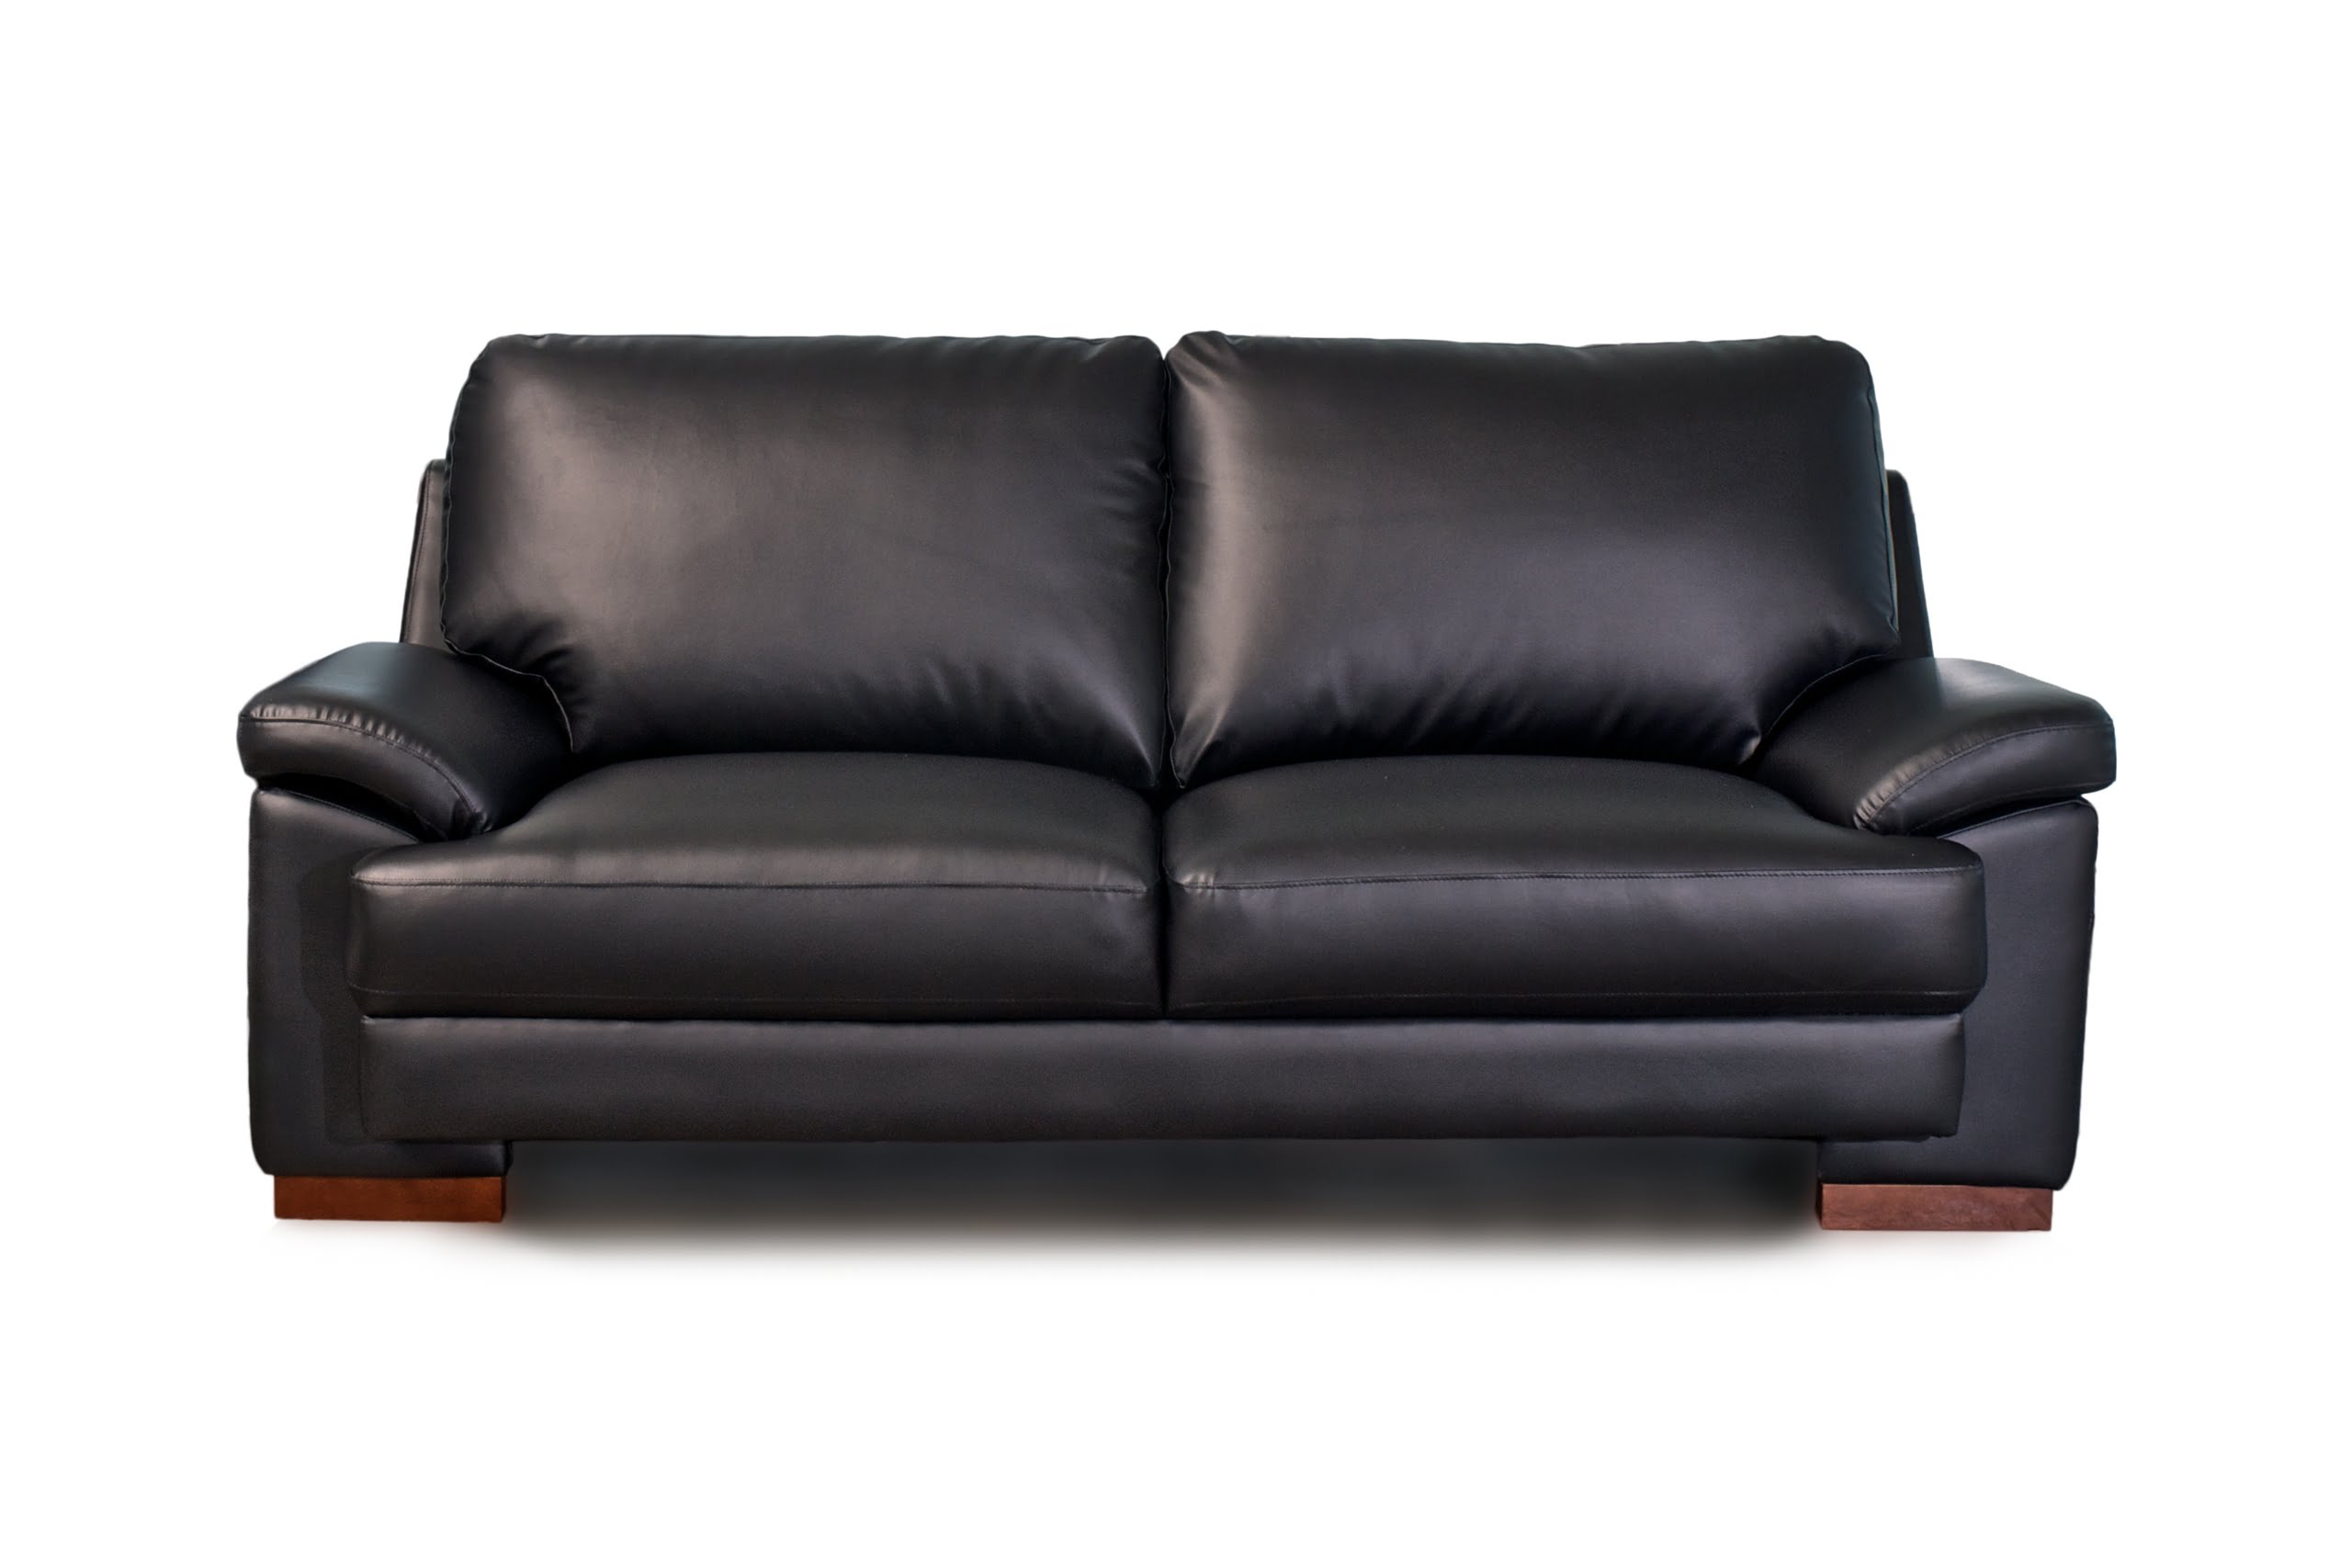 sleek black leather sofa